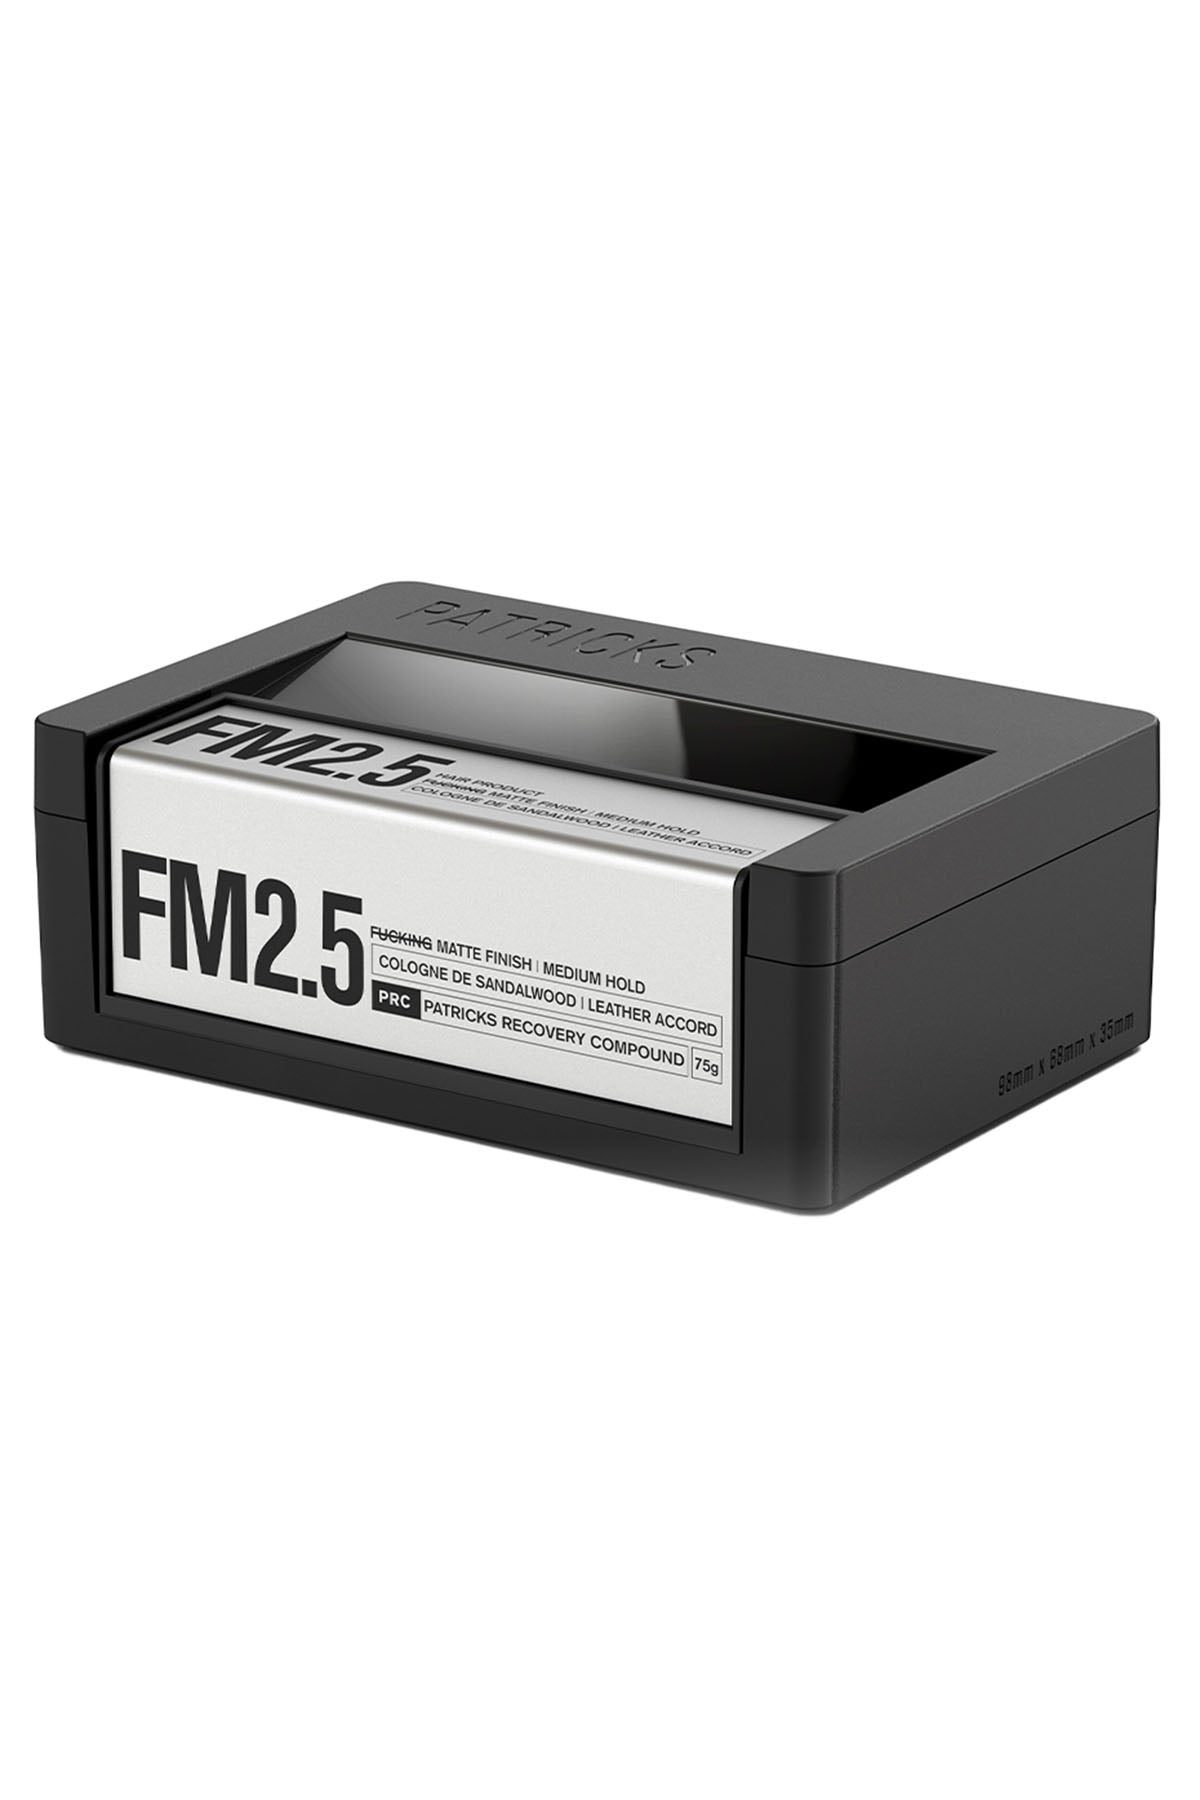 FM2.5 Super Matte Medium Hold Styling Product